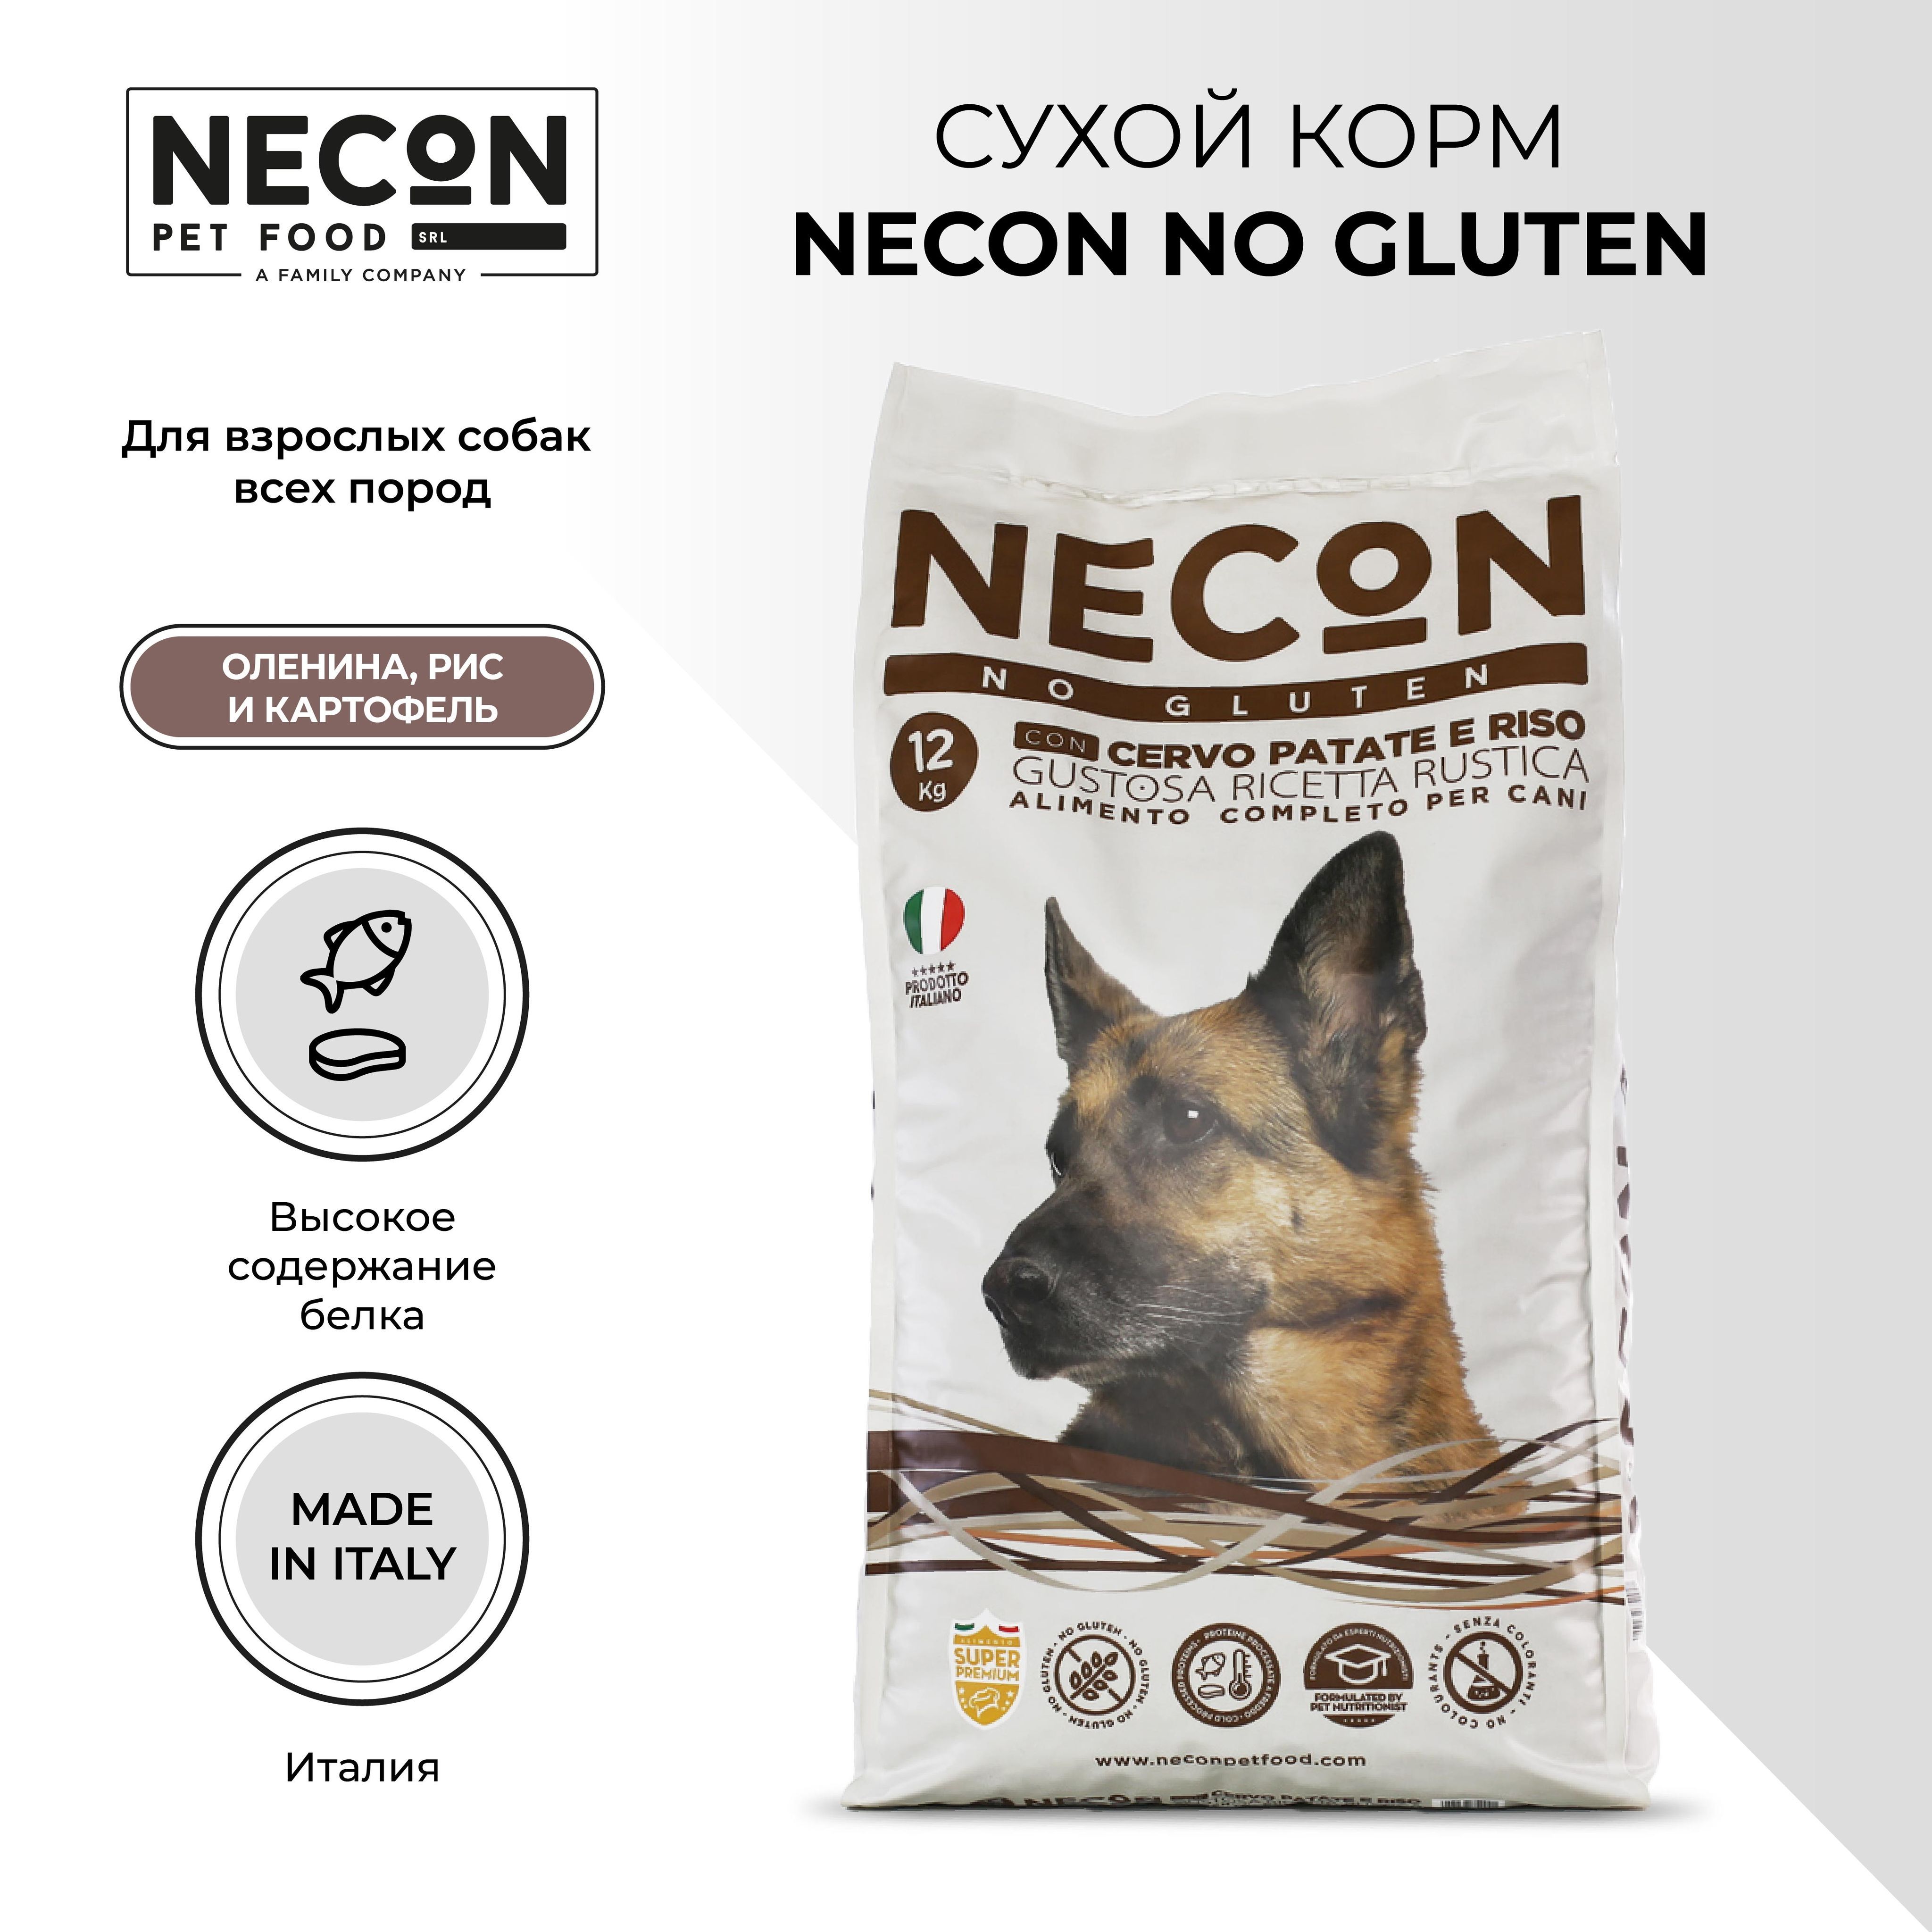 Сухой корм для собак Necon Zero Gluten Cervo Patate E Riso, оленина и картофель, 12 кг